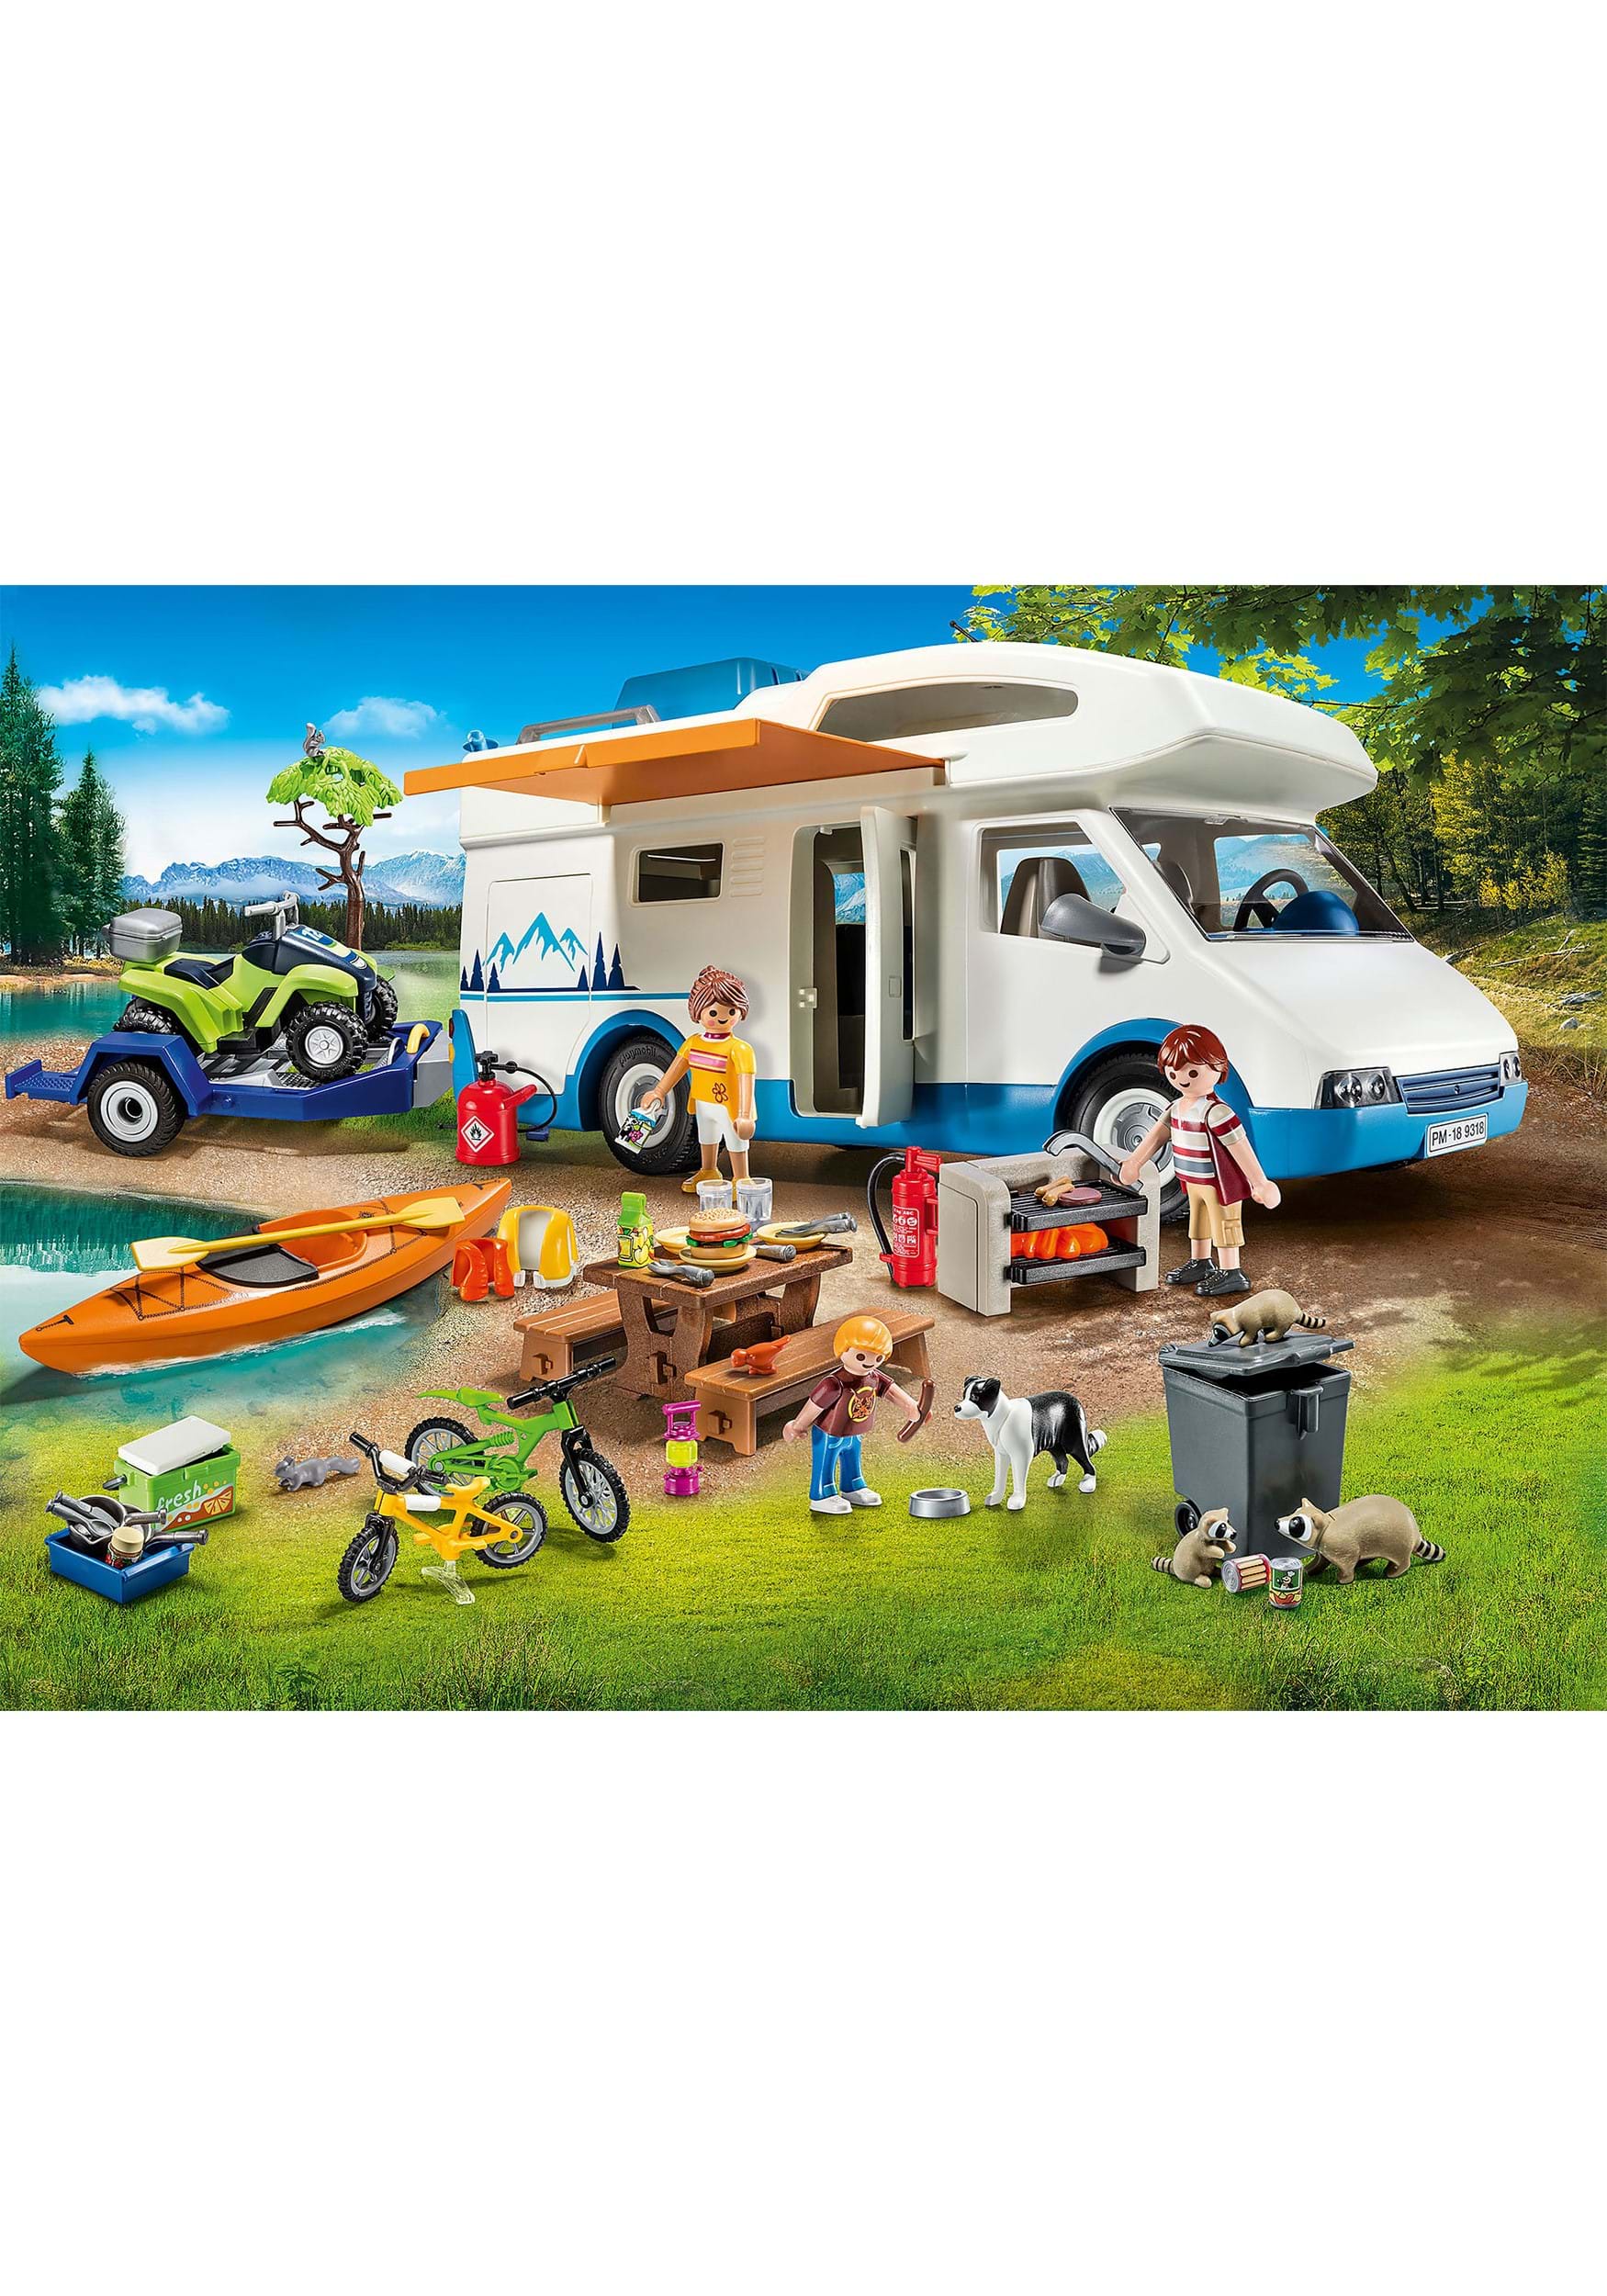 Playmobil Family Fun 9318 Aventura De Camping En Motorhome